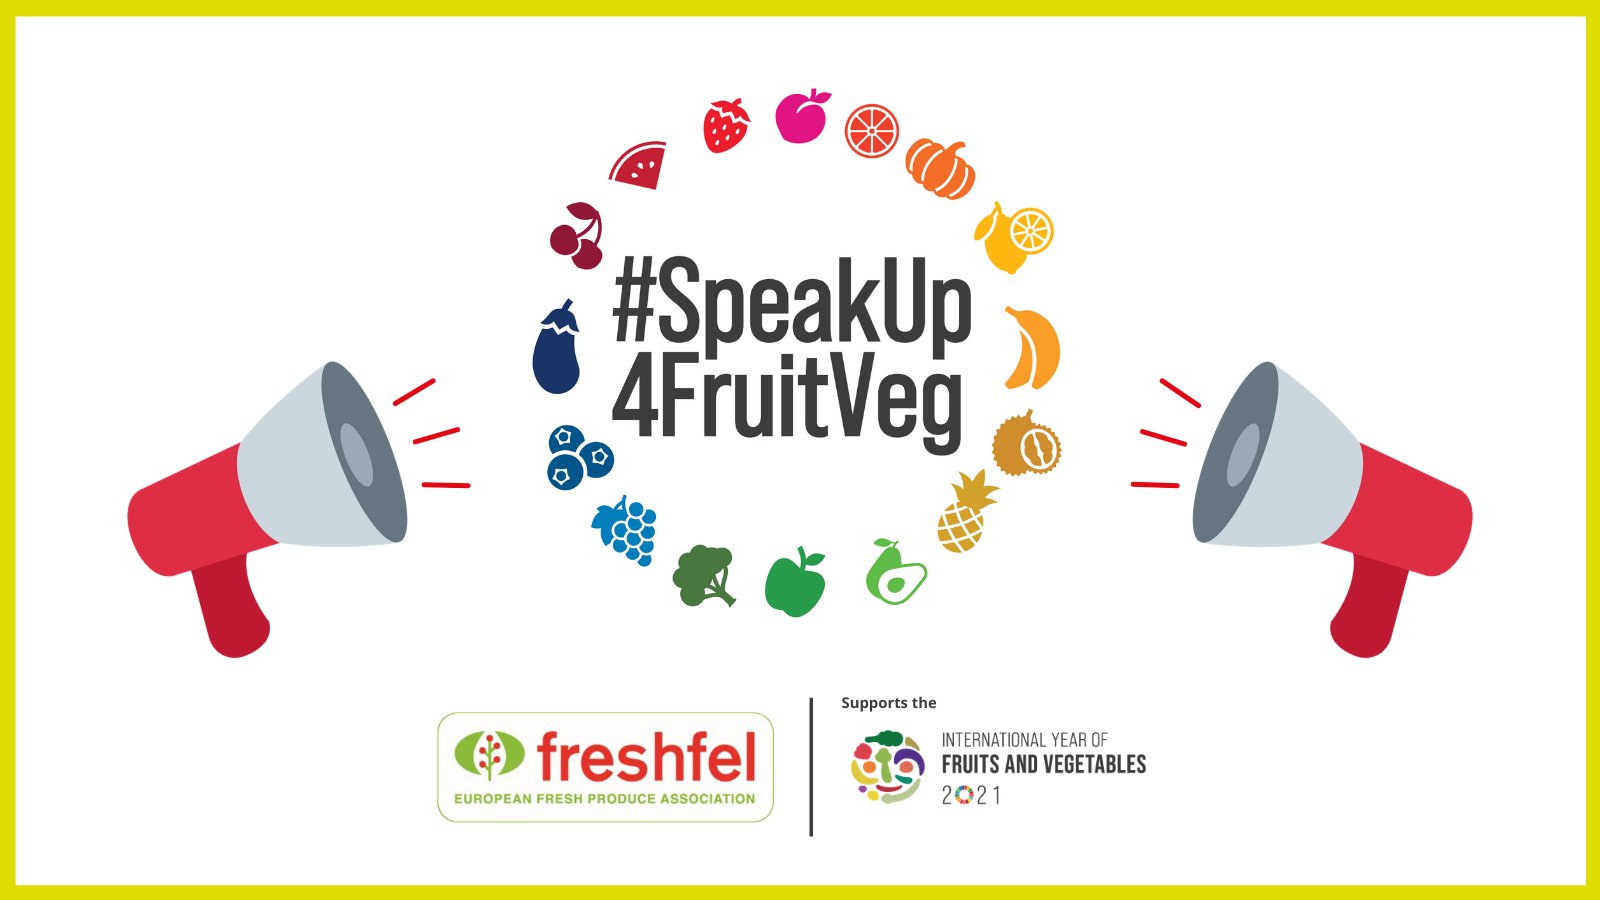 Freshfel Europe launches #SpeakUp4FruitVeg campaign for 2021 International Year of Fruits and Vegetables © Freshfel Europe